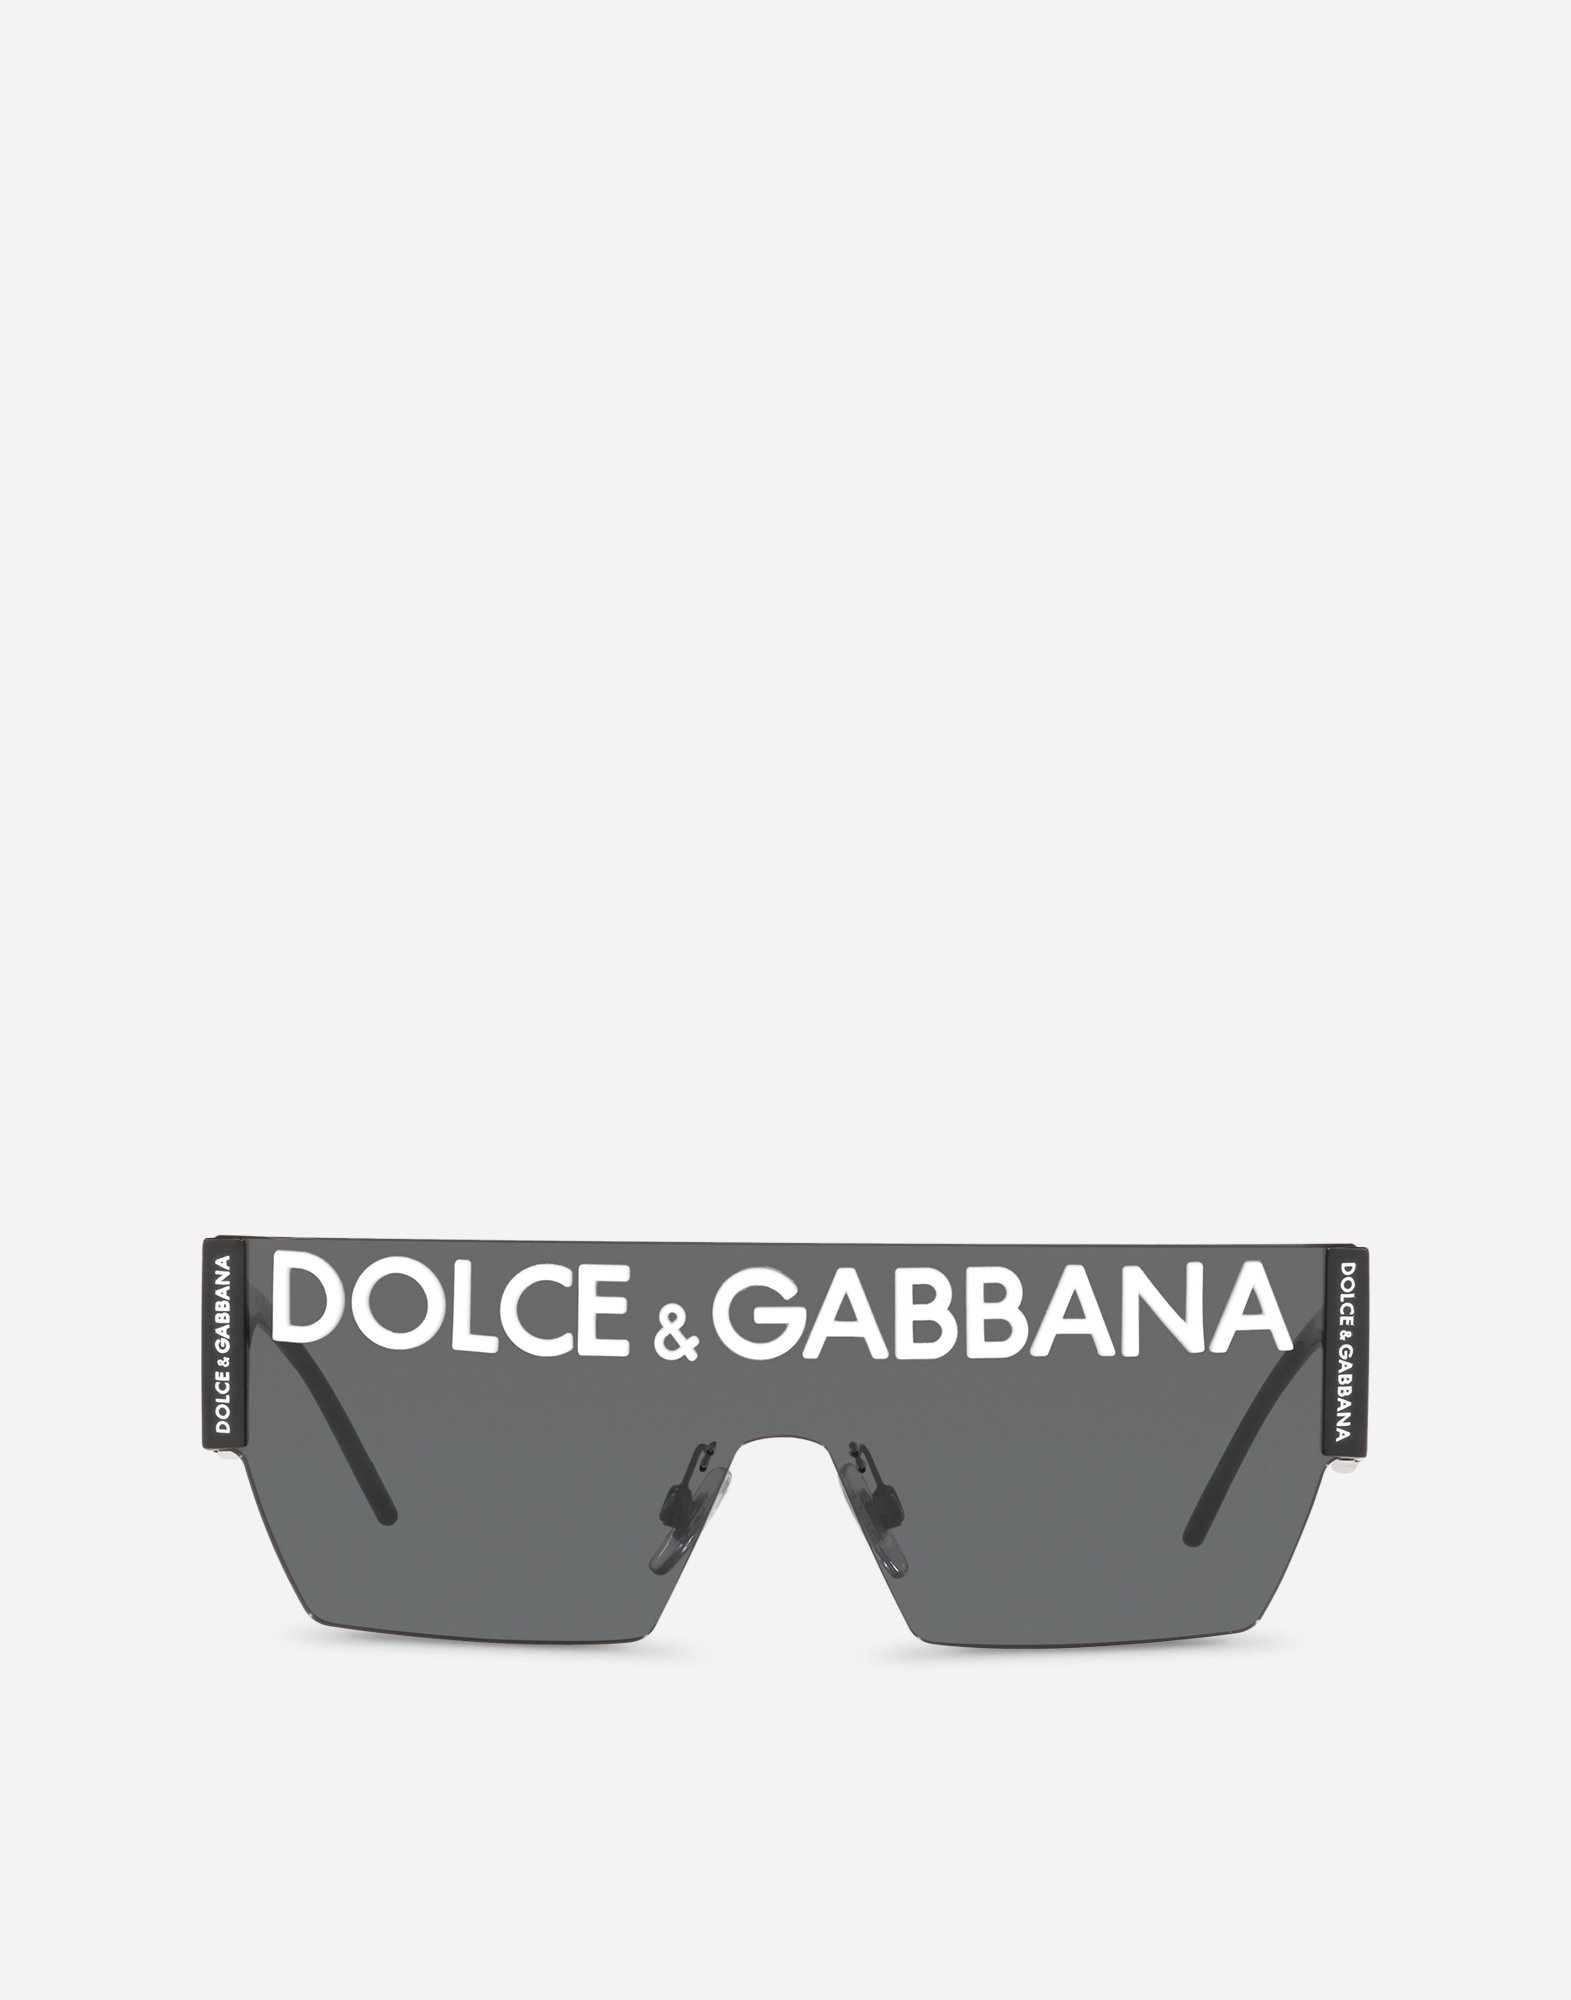 dolce and gabbana sunglasses 2020